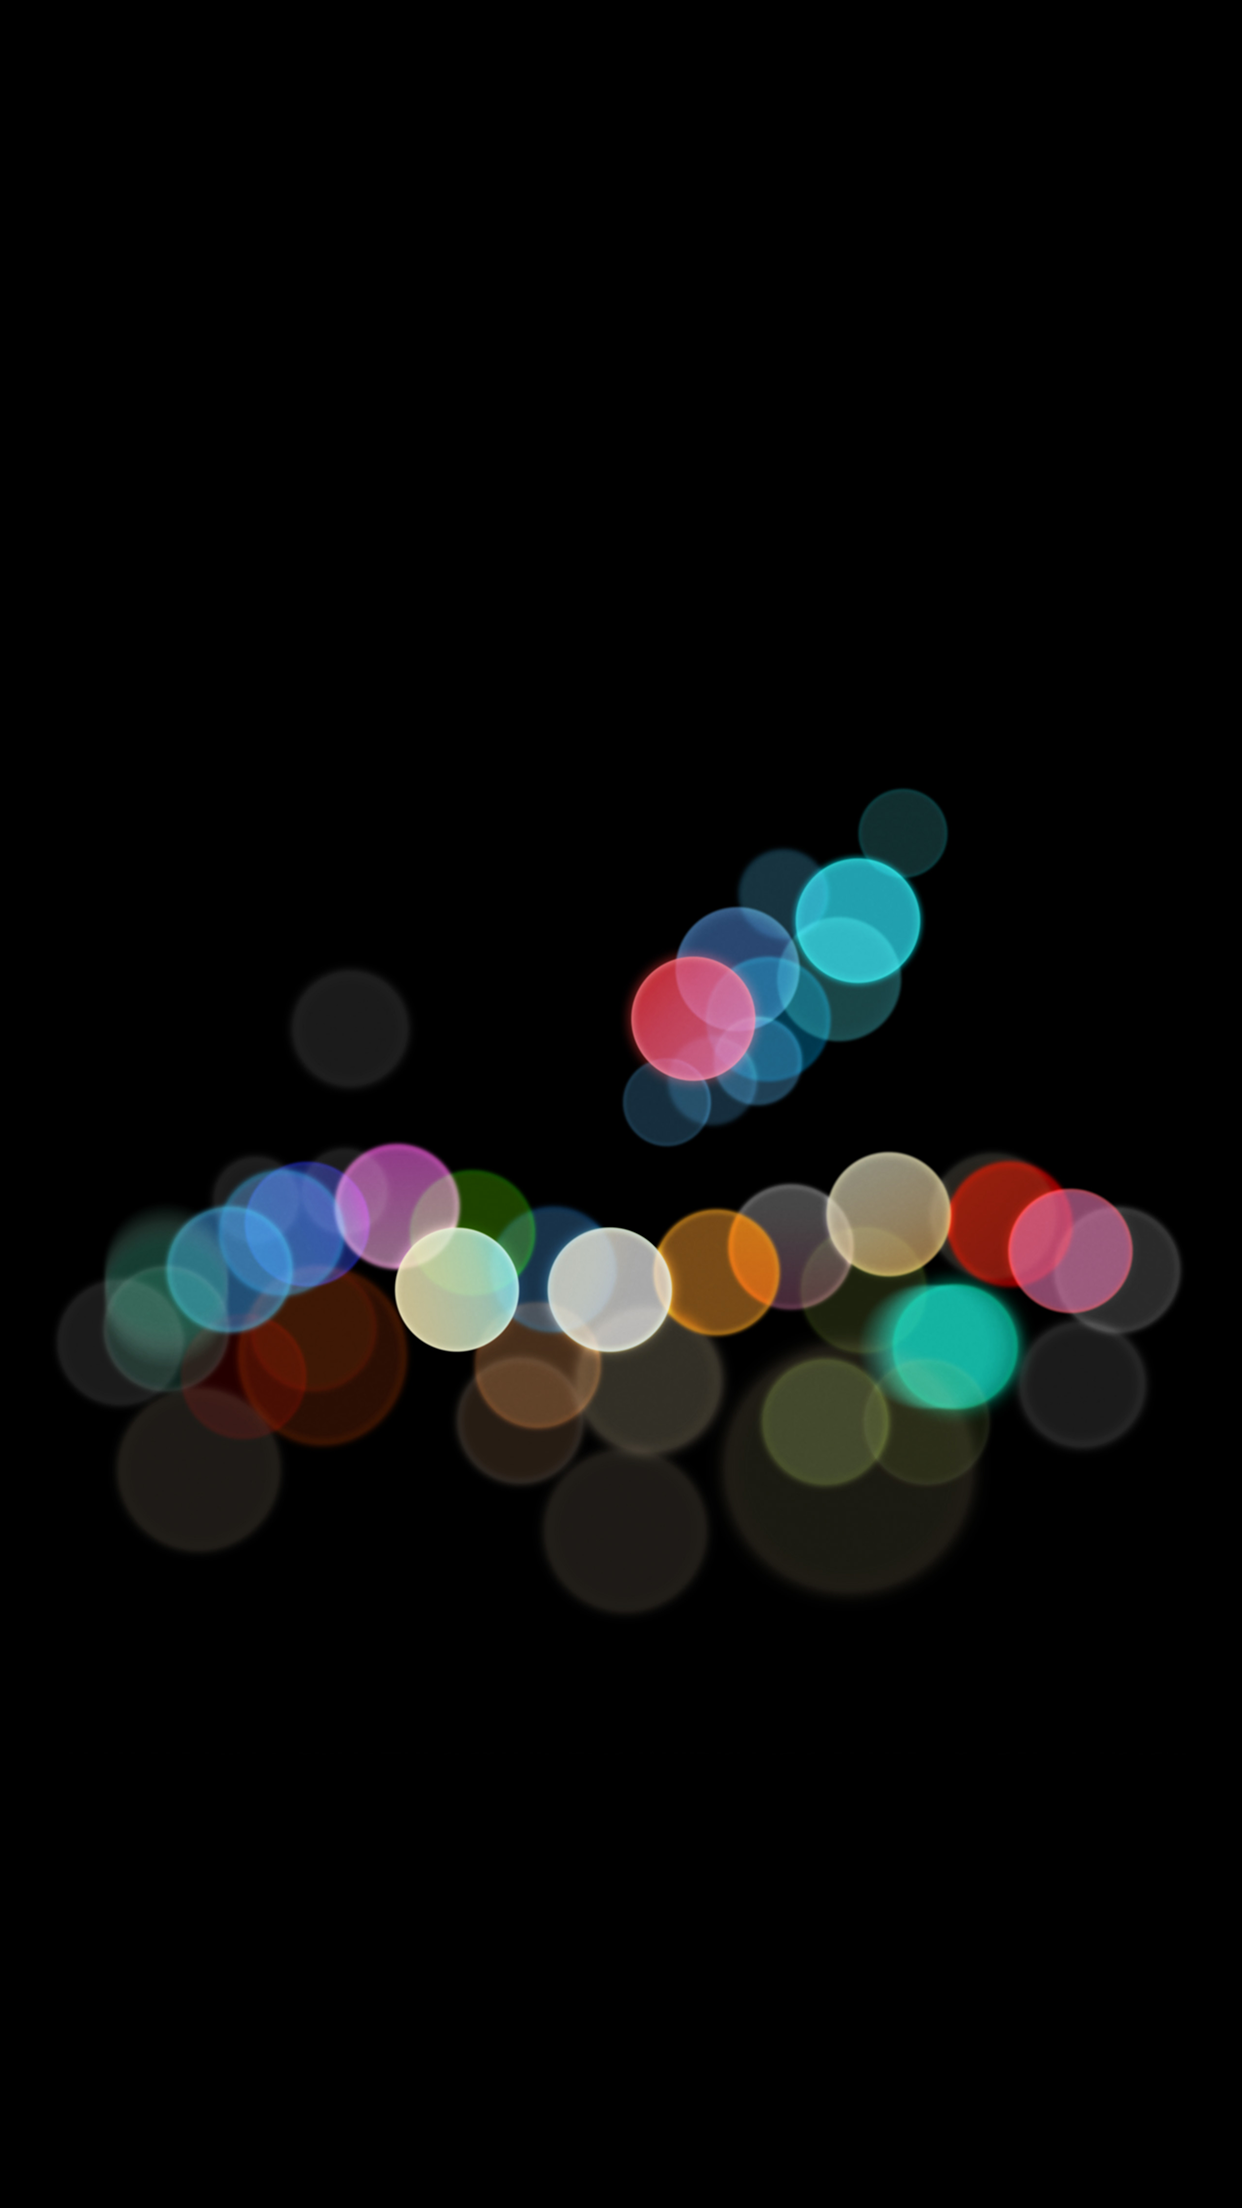 apple images wallpaper,light,circle,lighting,font,darkness